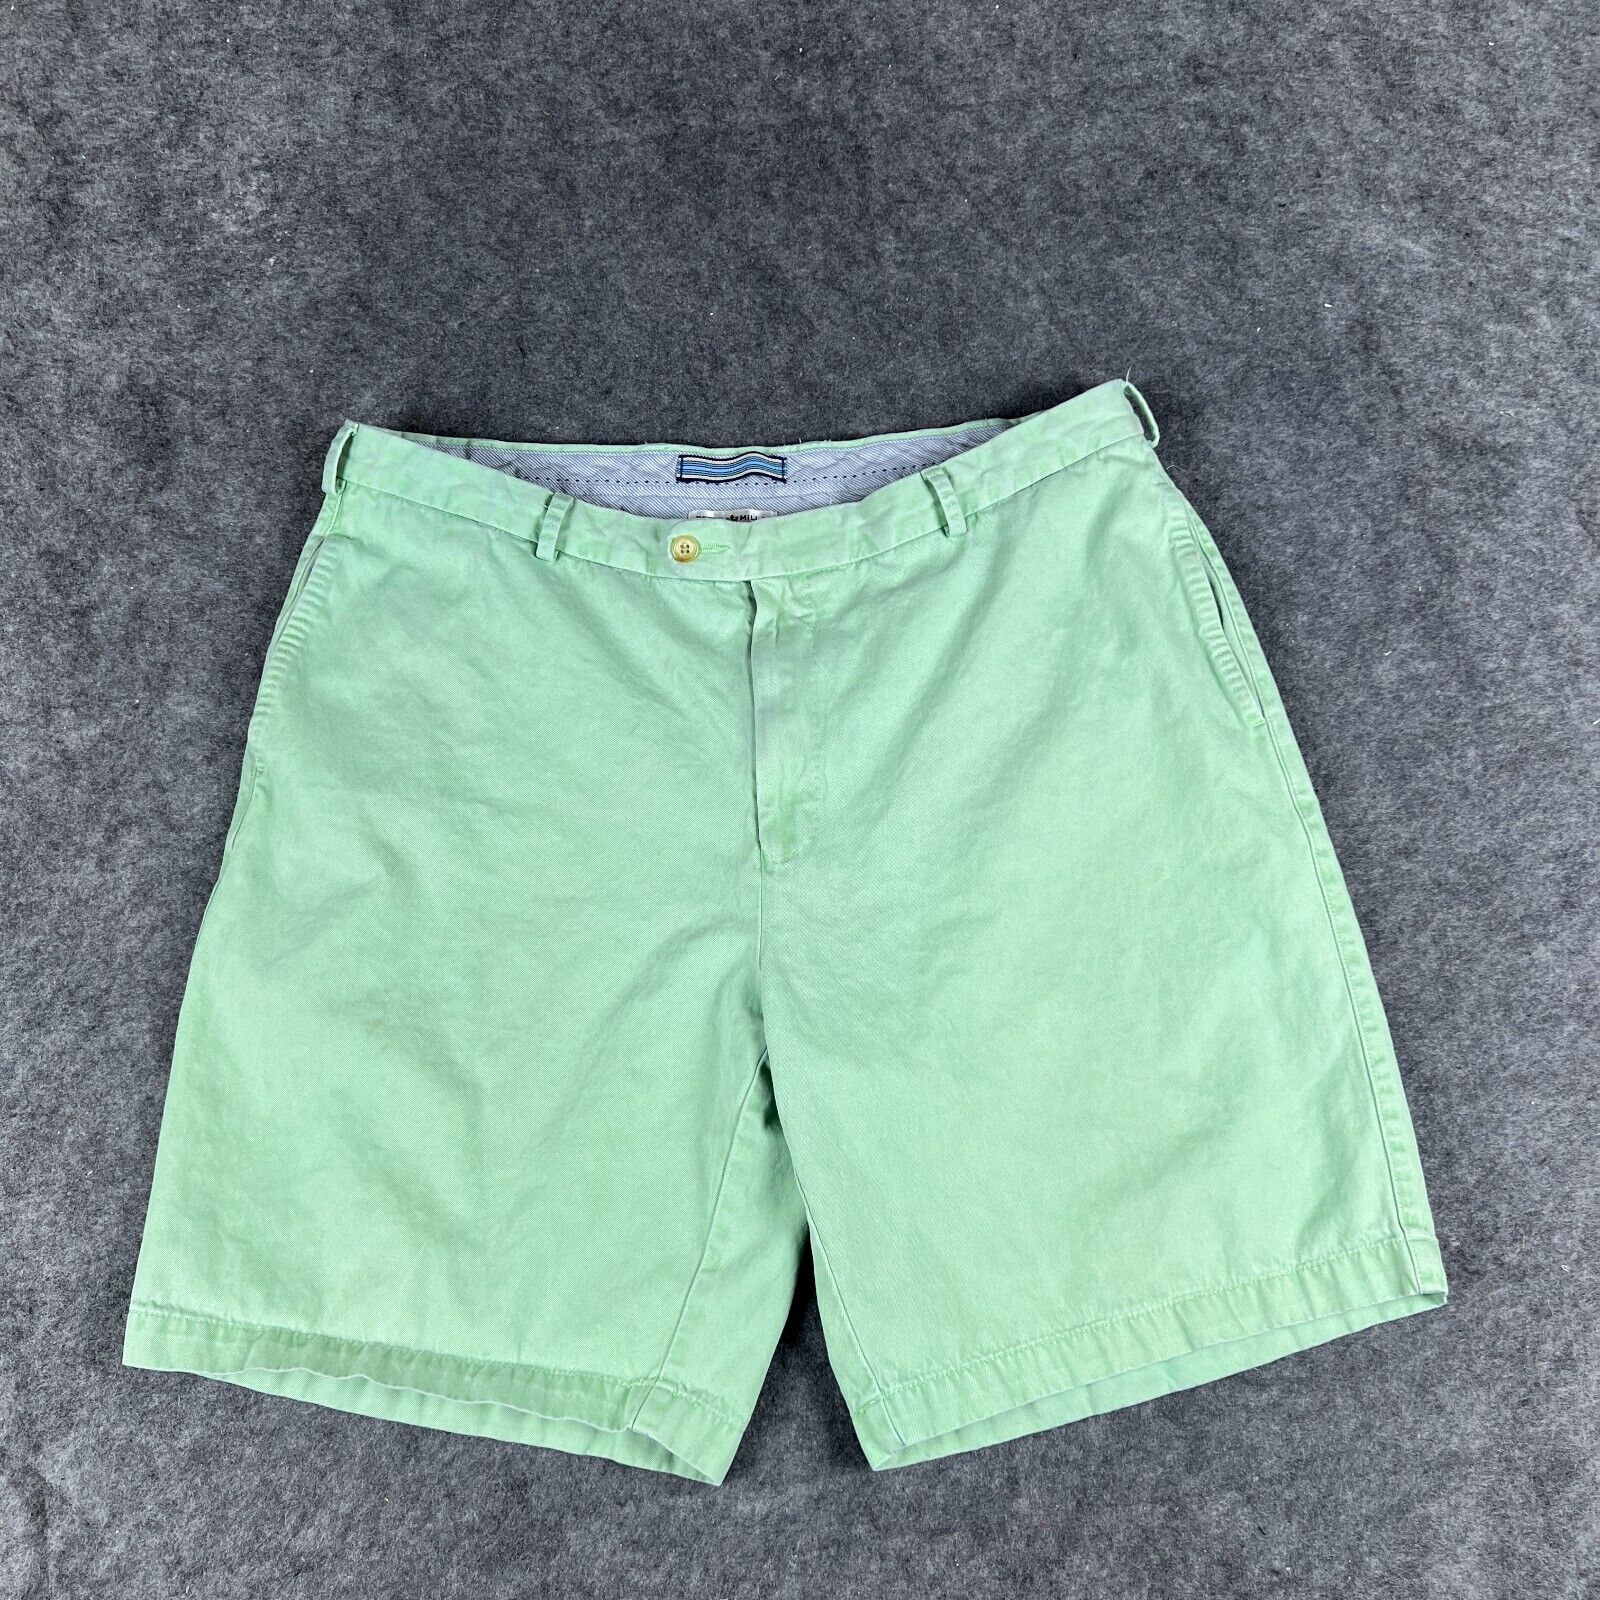 Peter Millar Shorts Mens 38 Green Light Golf Cotton Flat Front Colorful